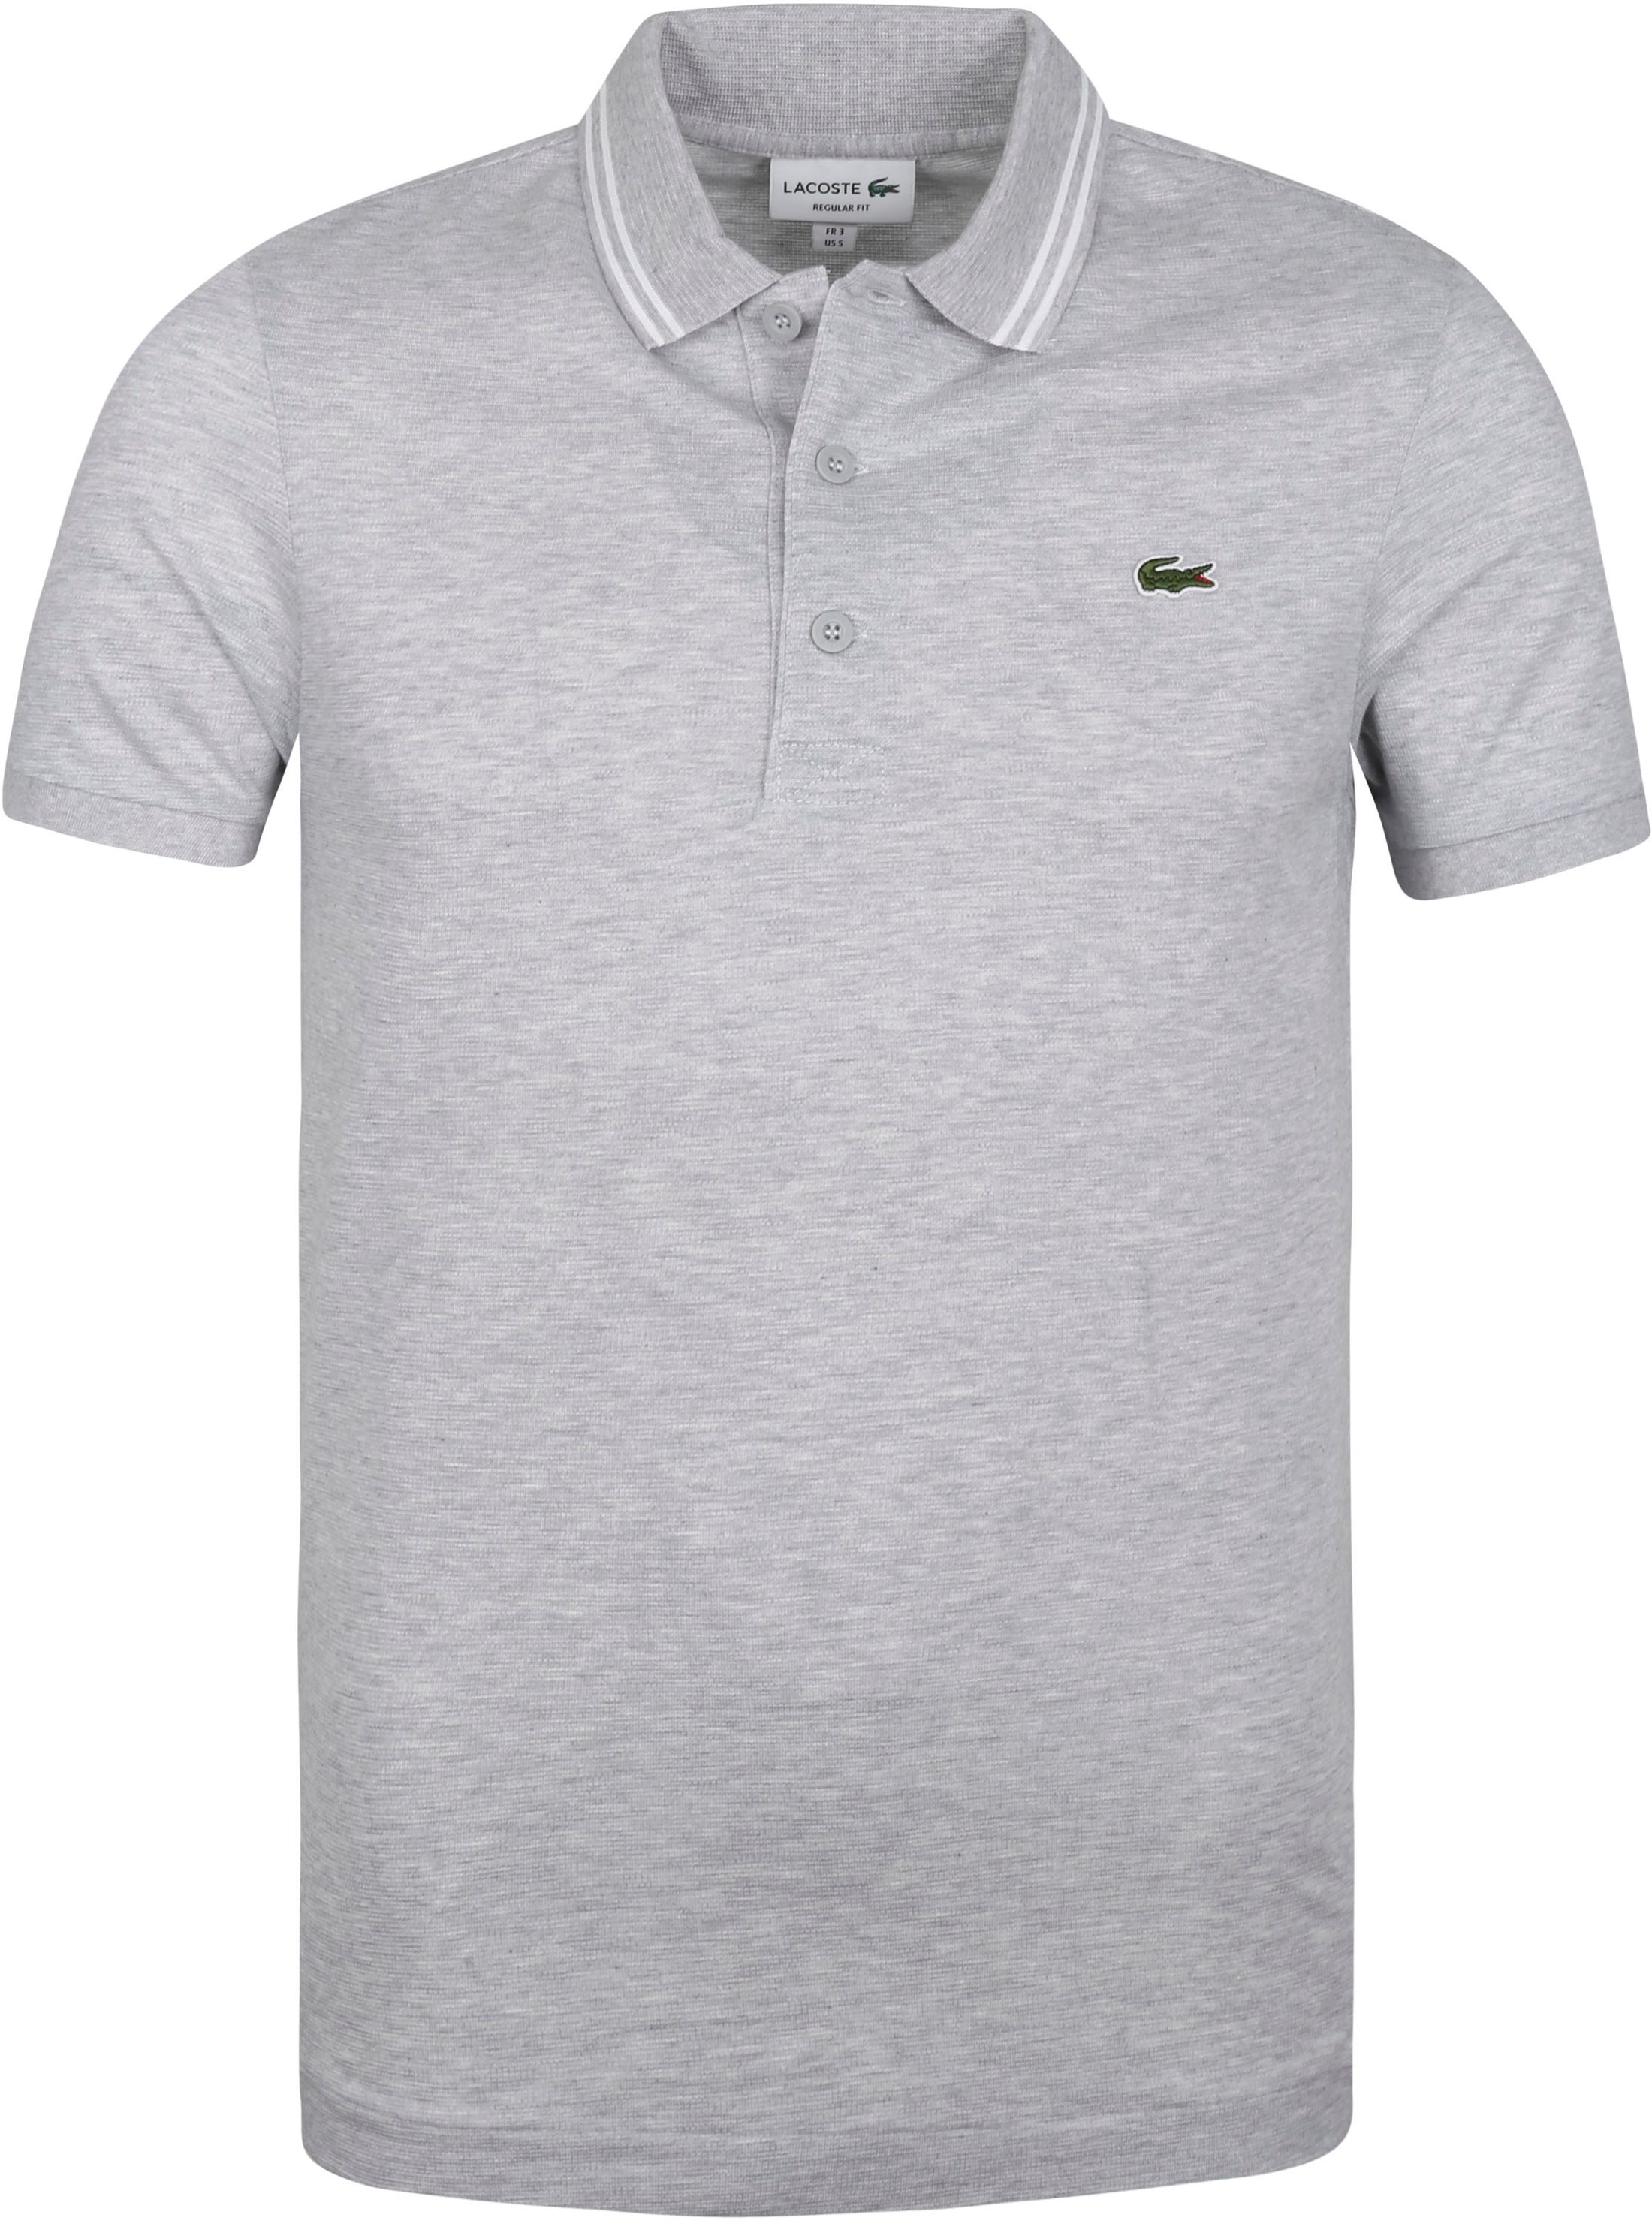 Lacoste Polo Shirt Gray Grey size 3XL